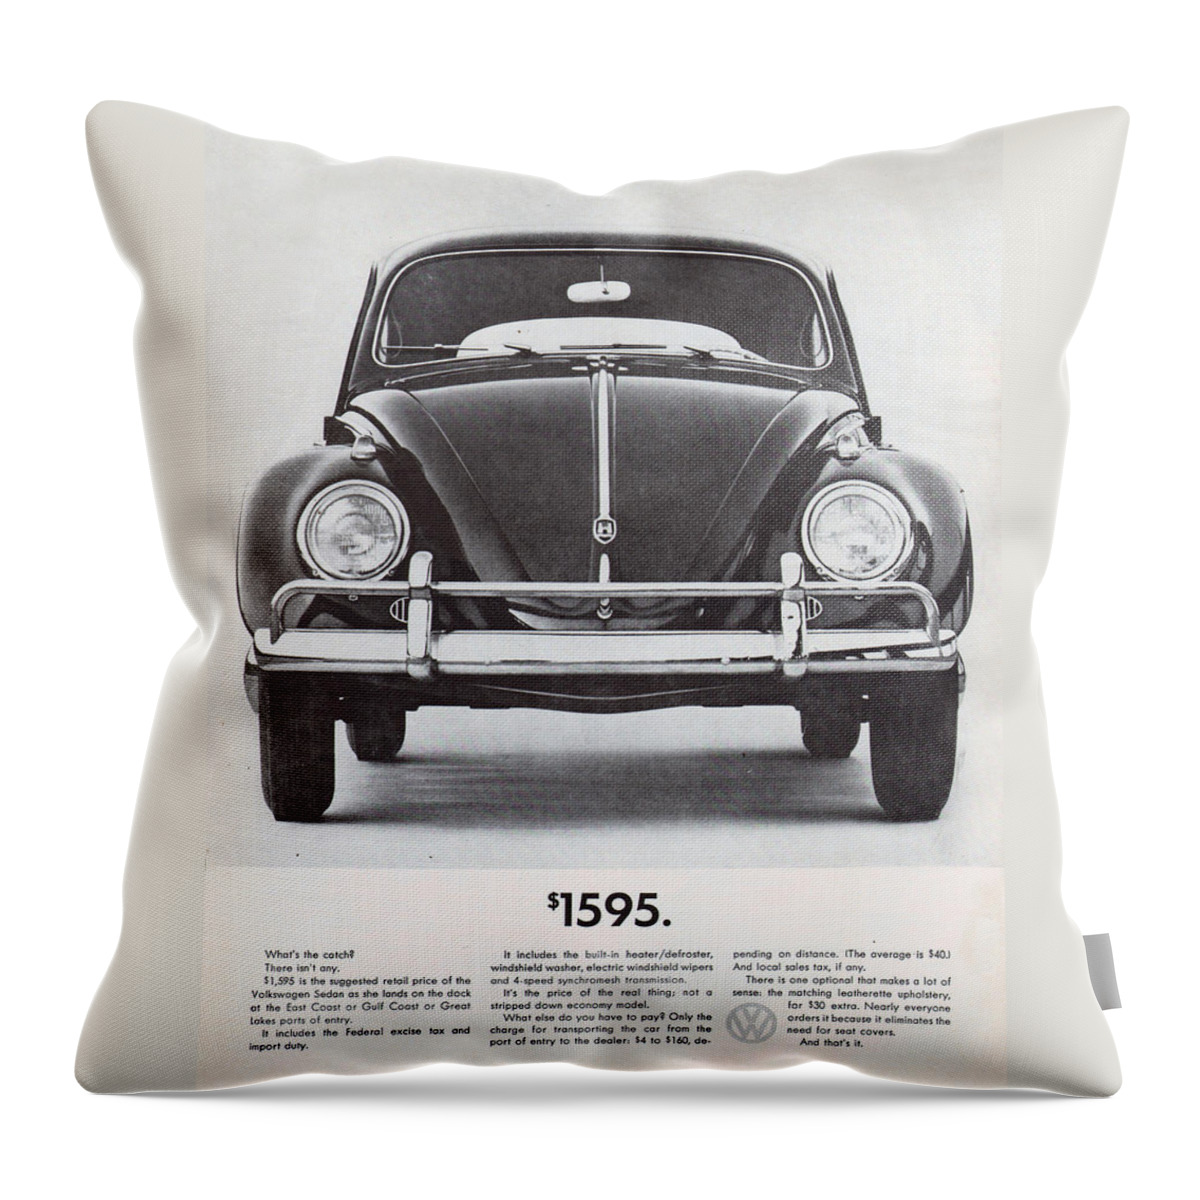 Vw Beetle Throw Pillow featuring the digital art Volkswagen Beetle by Georgia Fowler